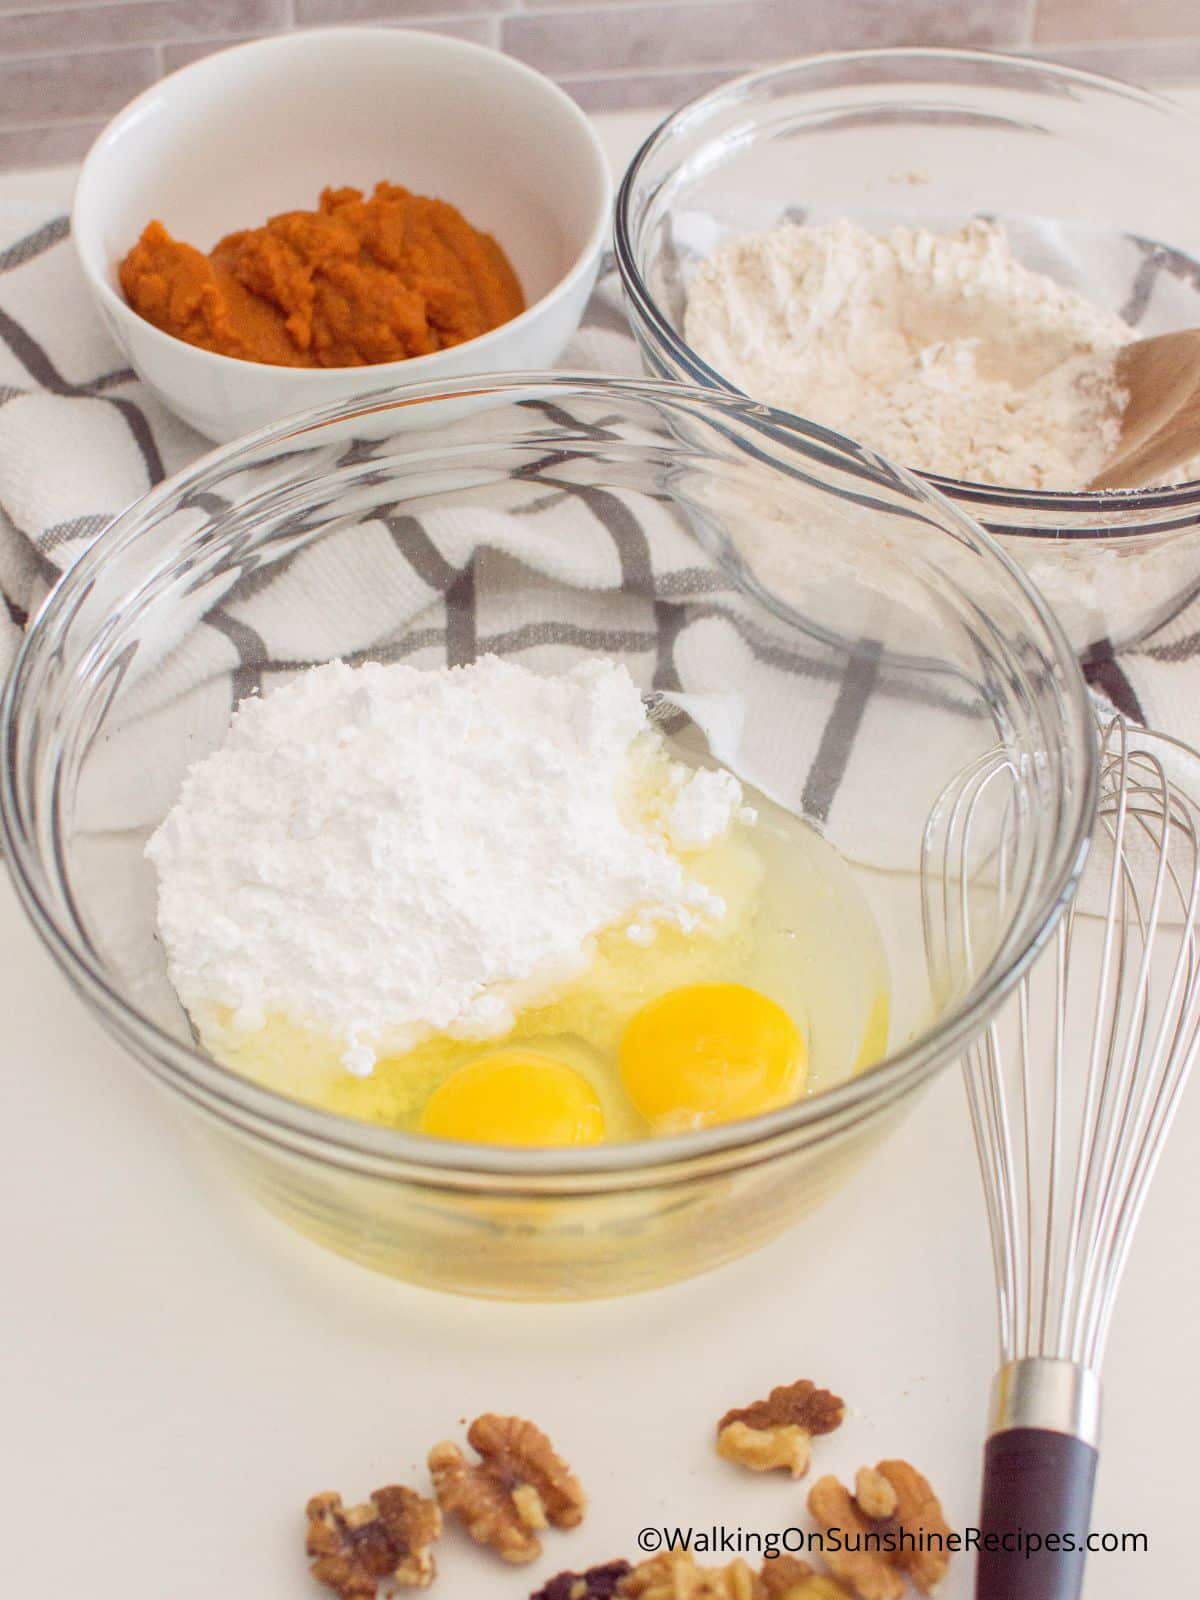 Add eggs to powdered sugar mixture.